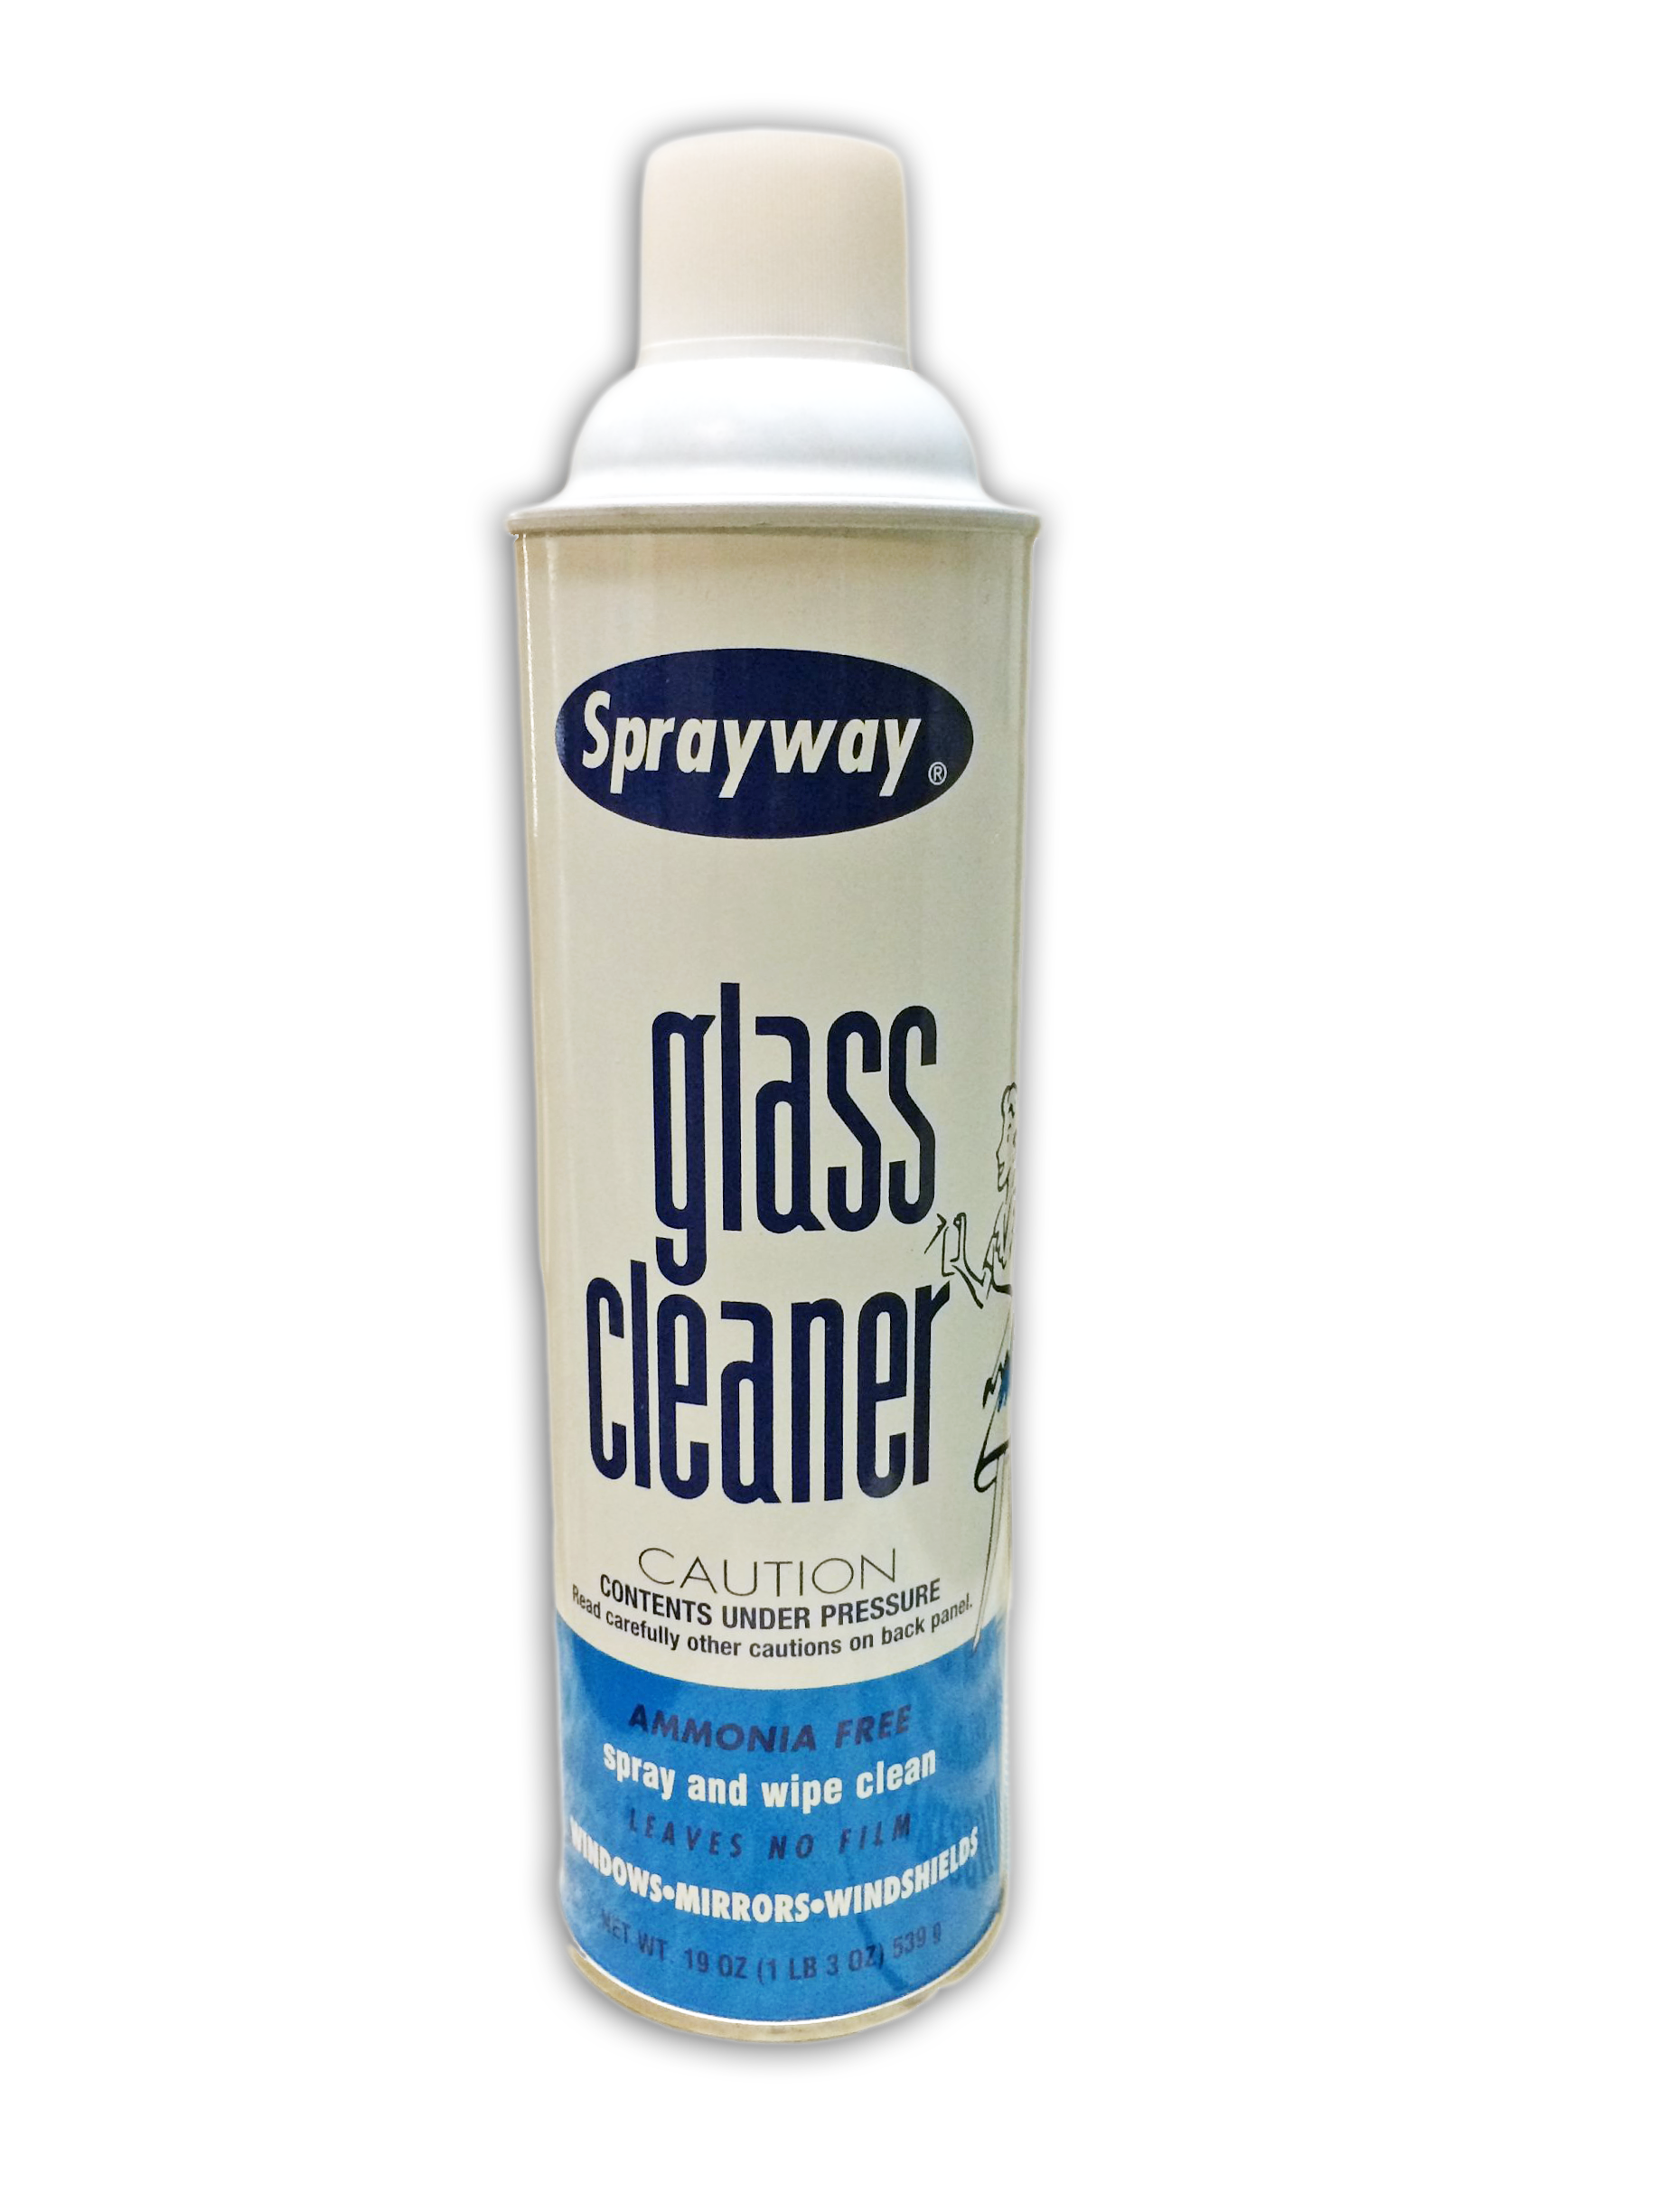 SPRAYAWAY GLASS CLEANER- EPA COMPLIANT 092110 - WORLD'S FINEST CAR